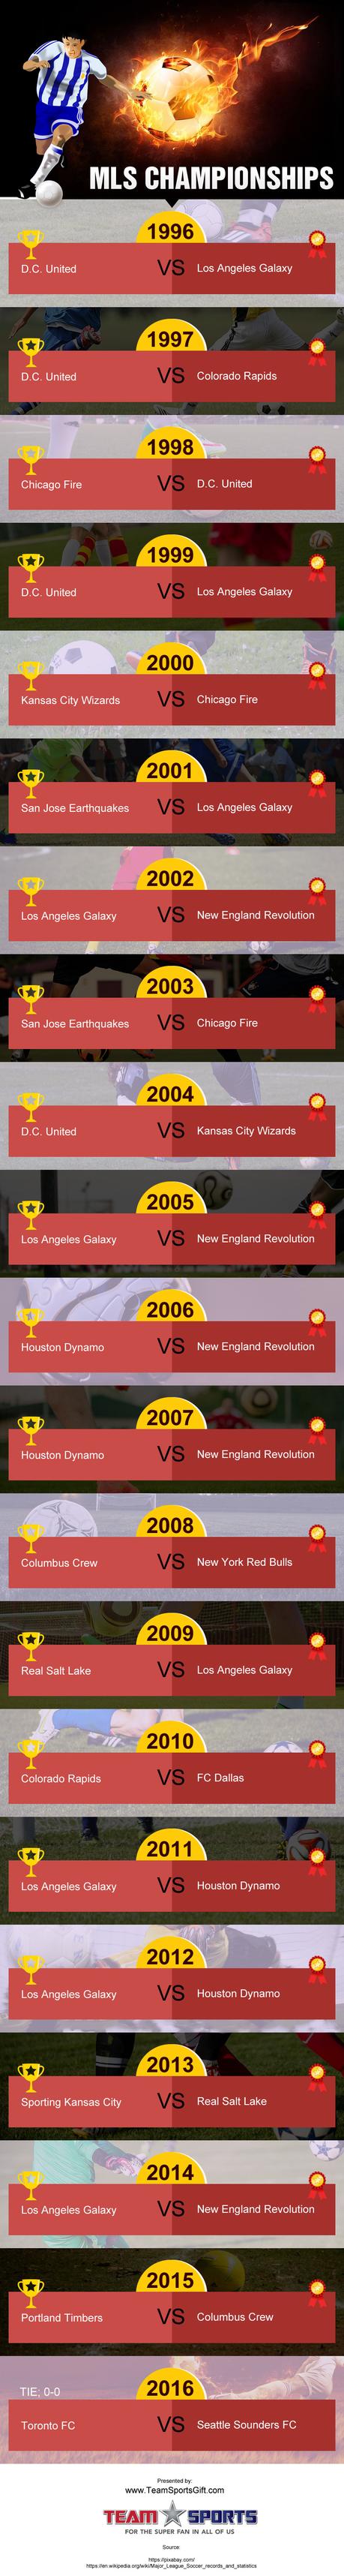 MLS Championships [infographic]